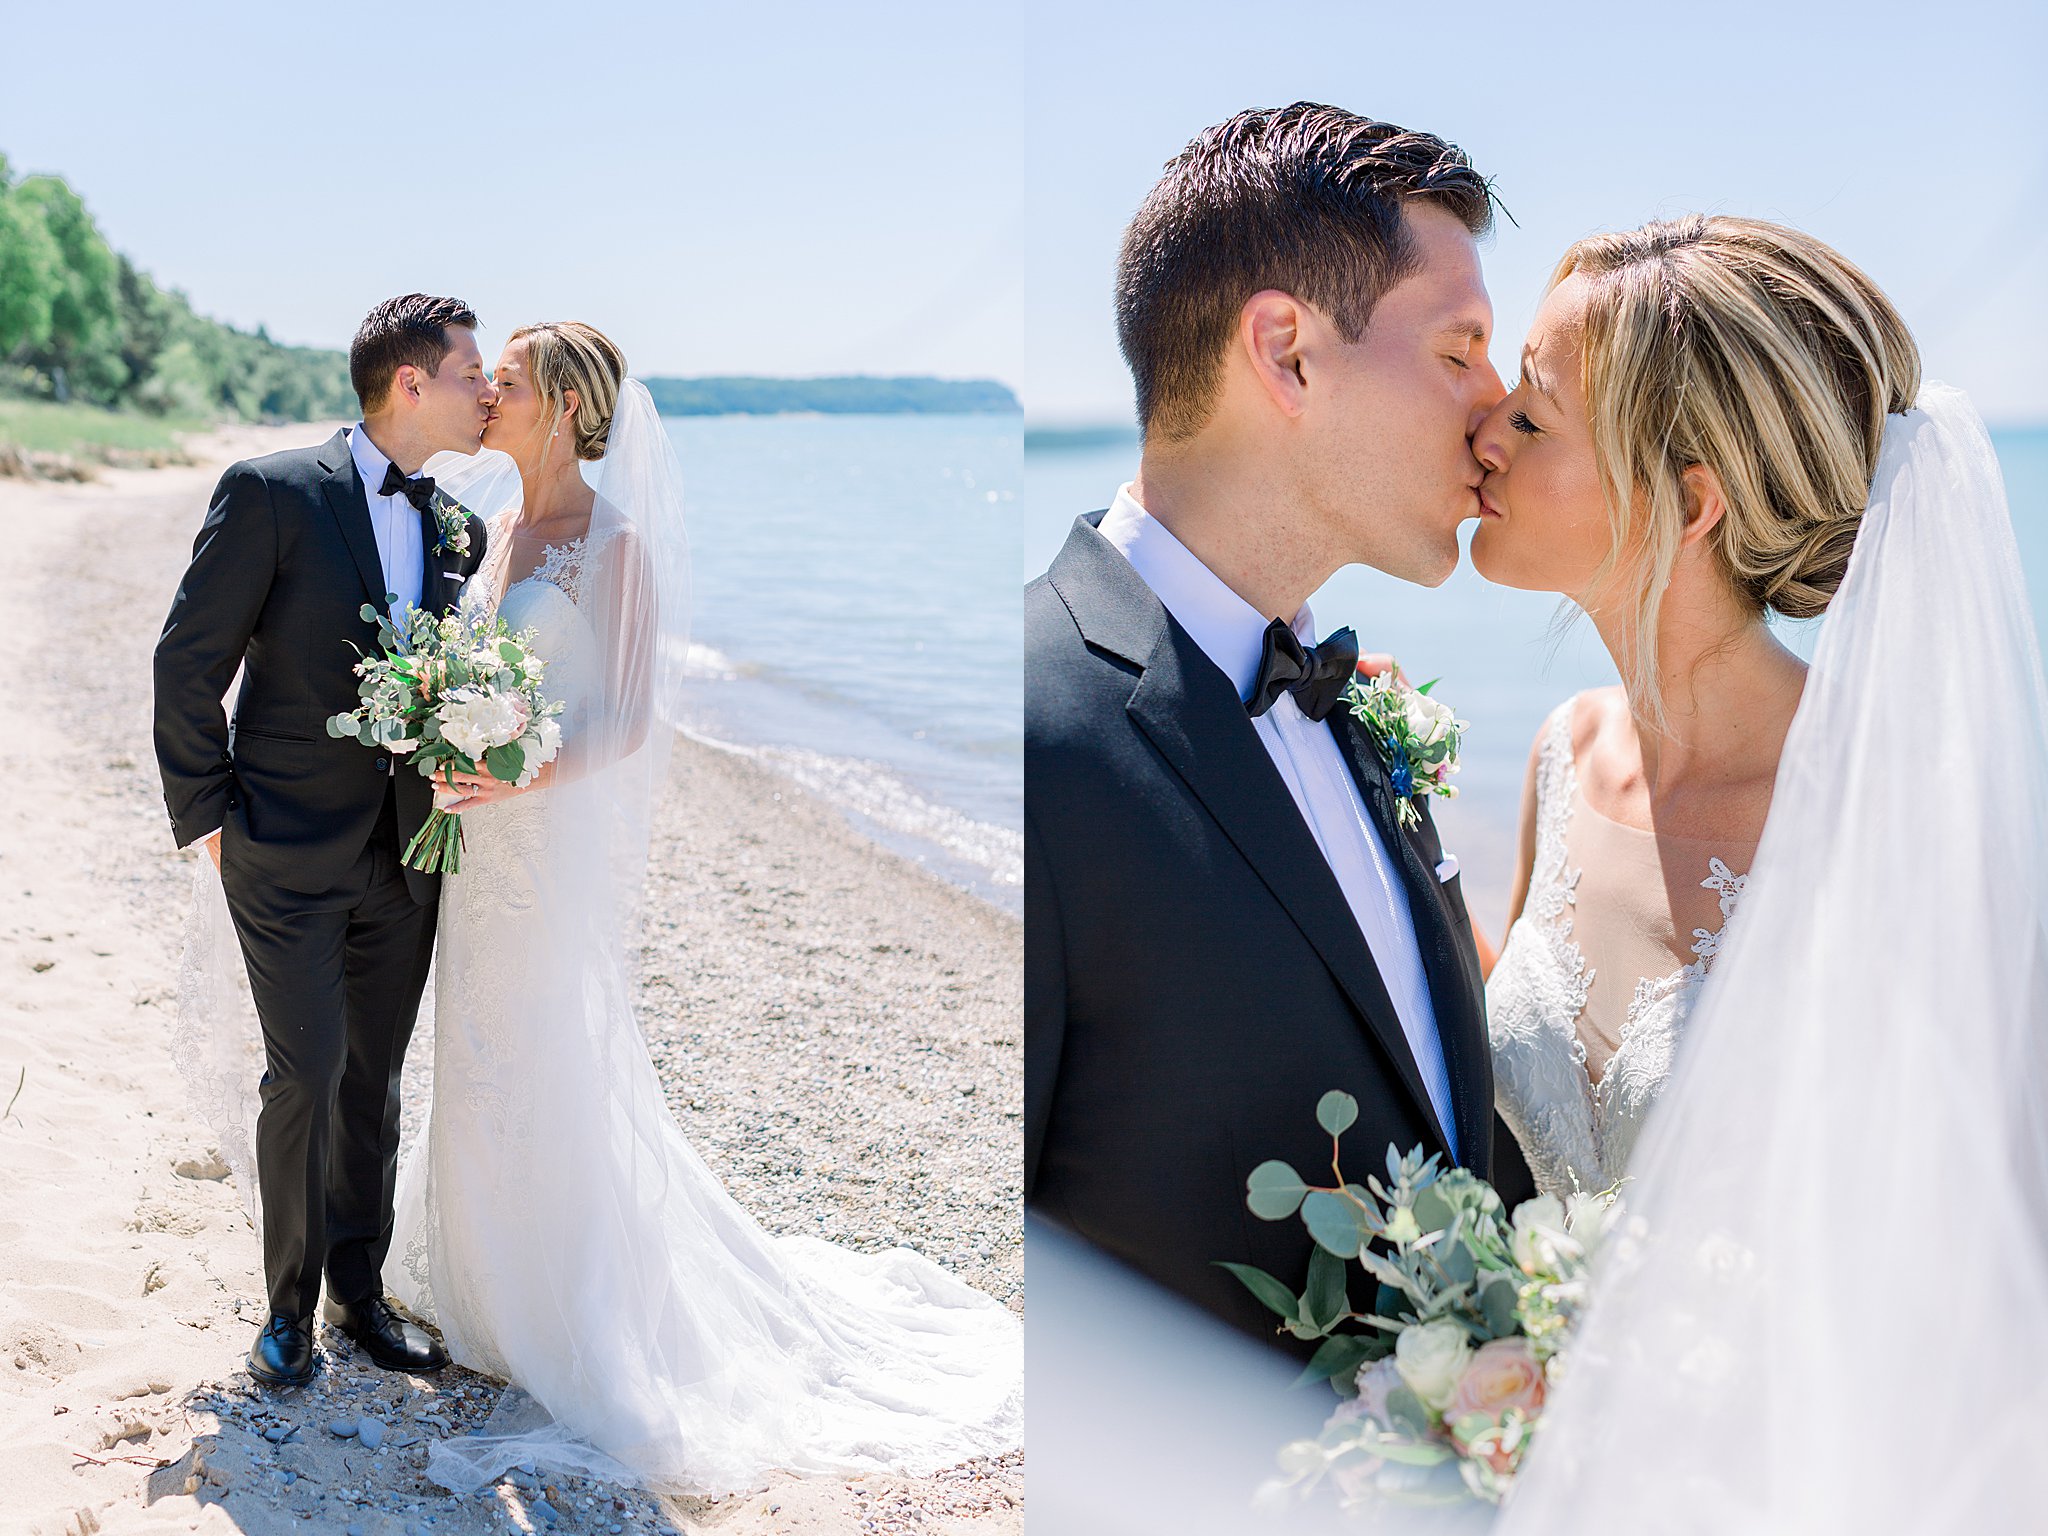 Bride and groom kiss on lakeshore during intimate Lake Michigan wedding.